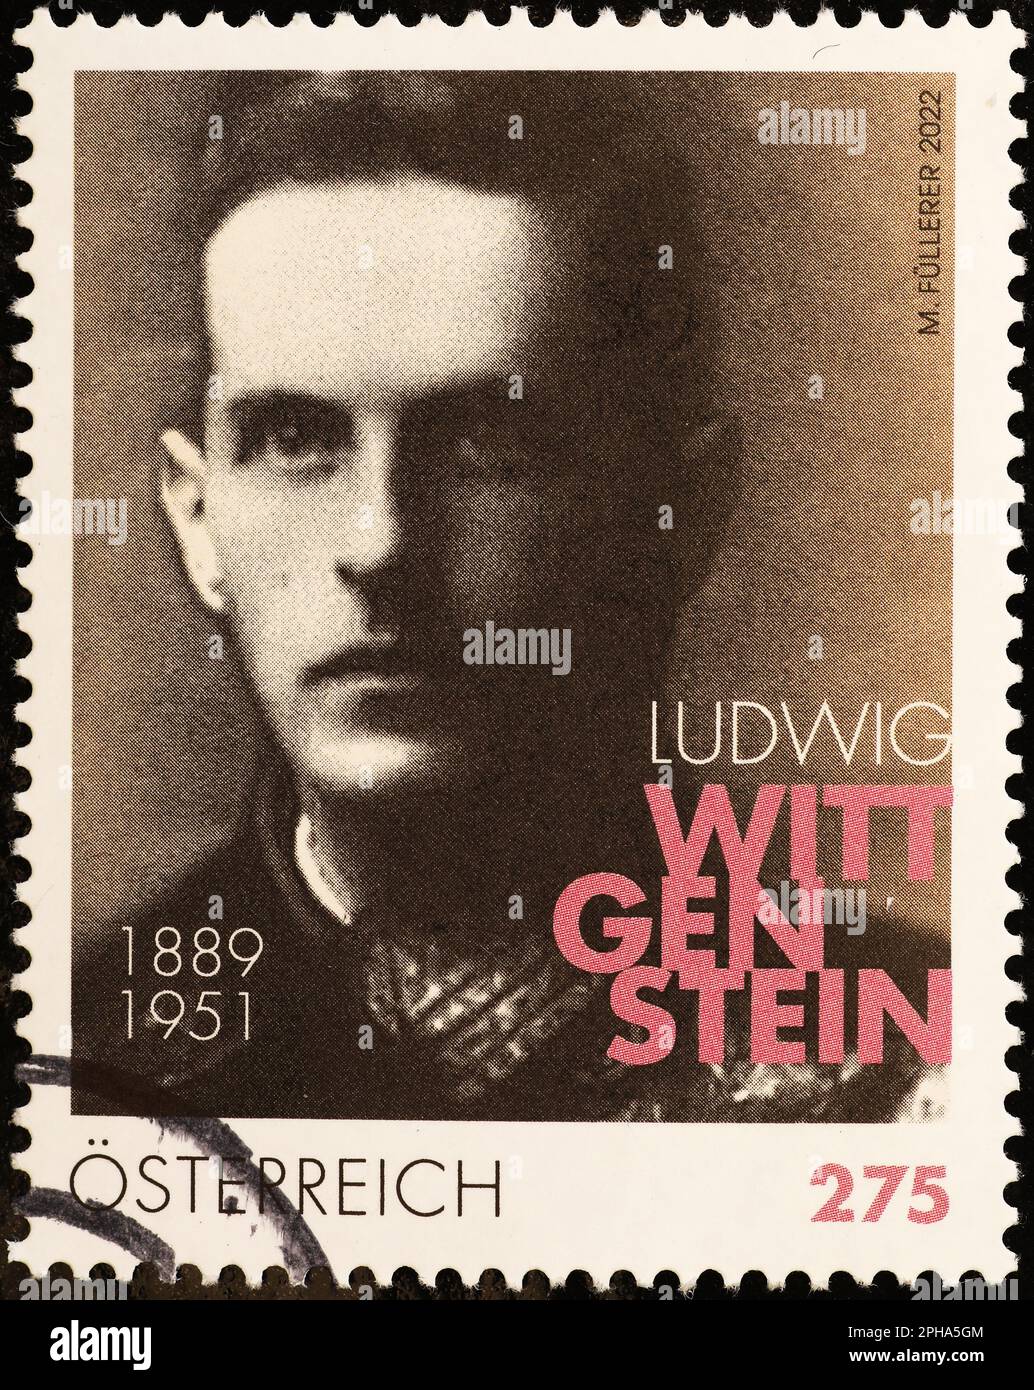 Ludwig Wittgenstein en sello postal austriaco Foto de stock